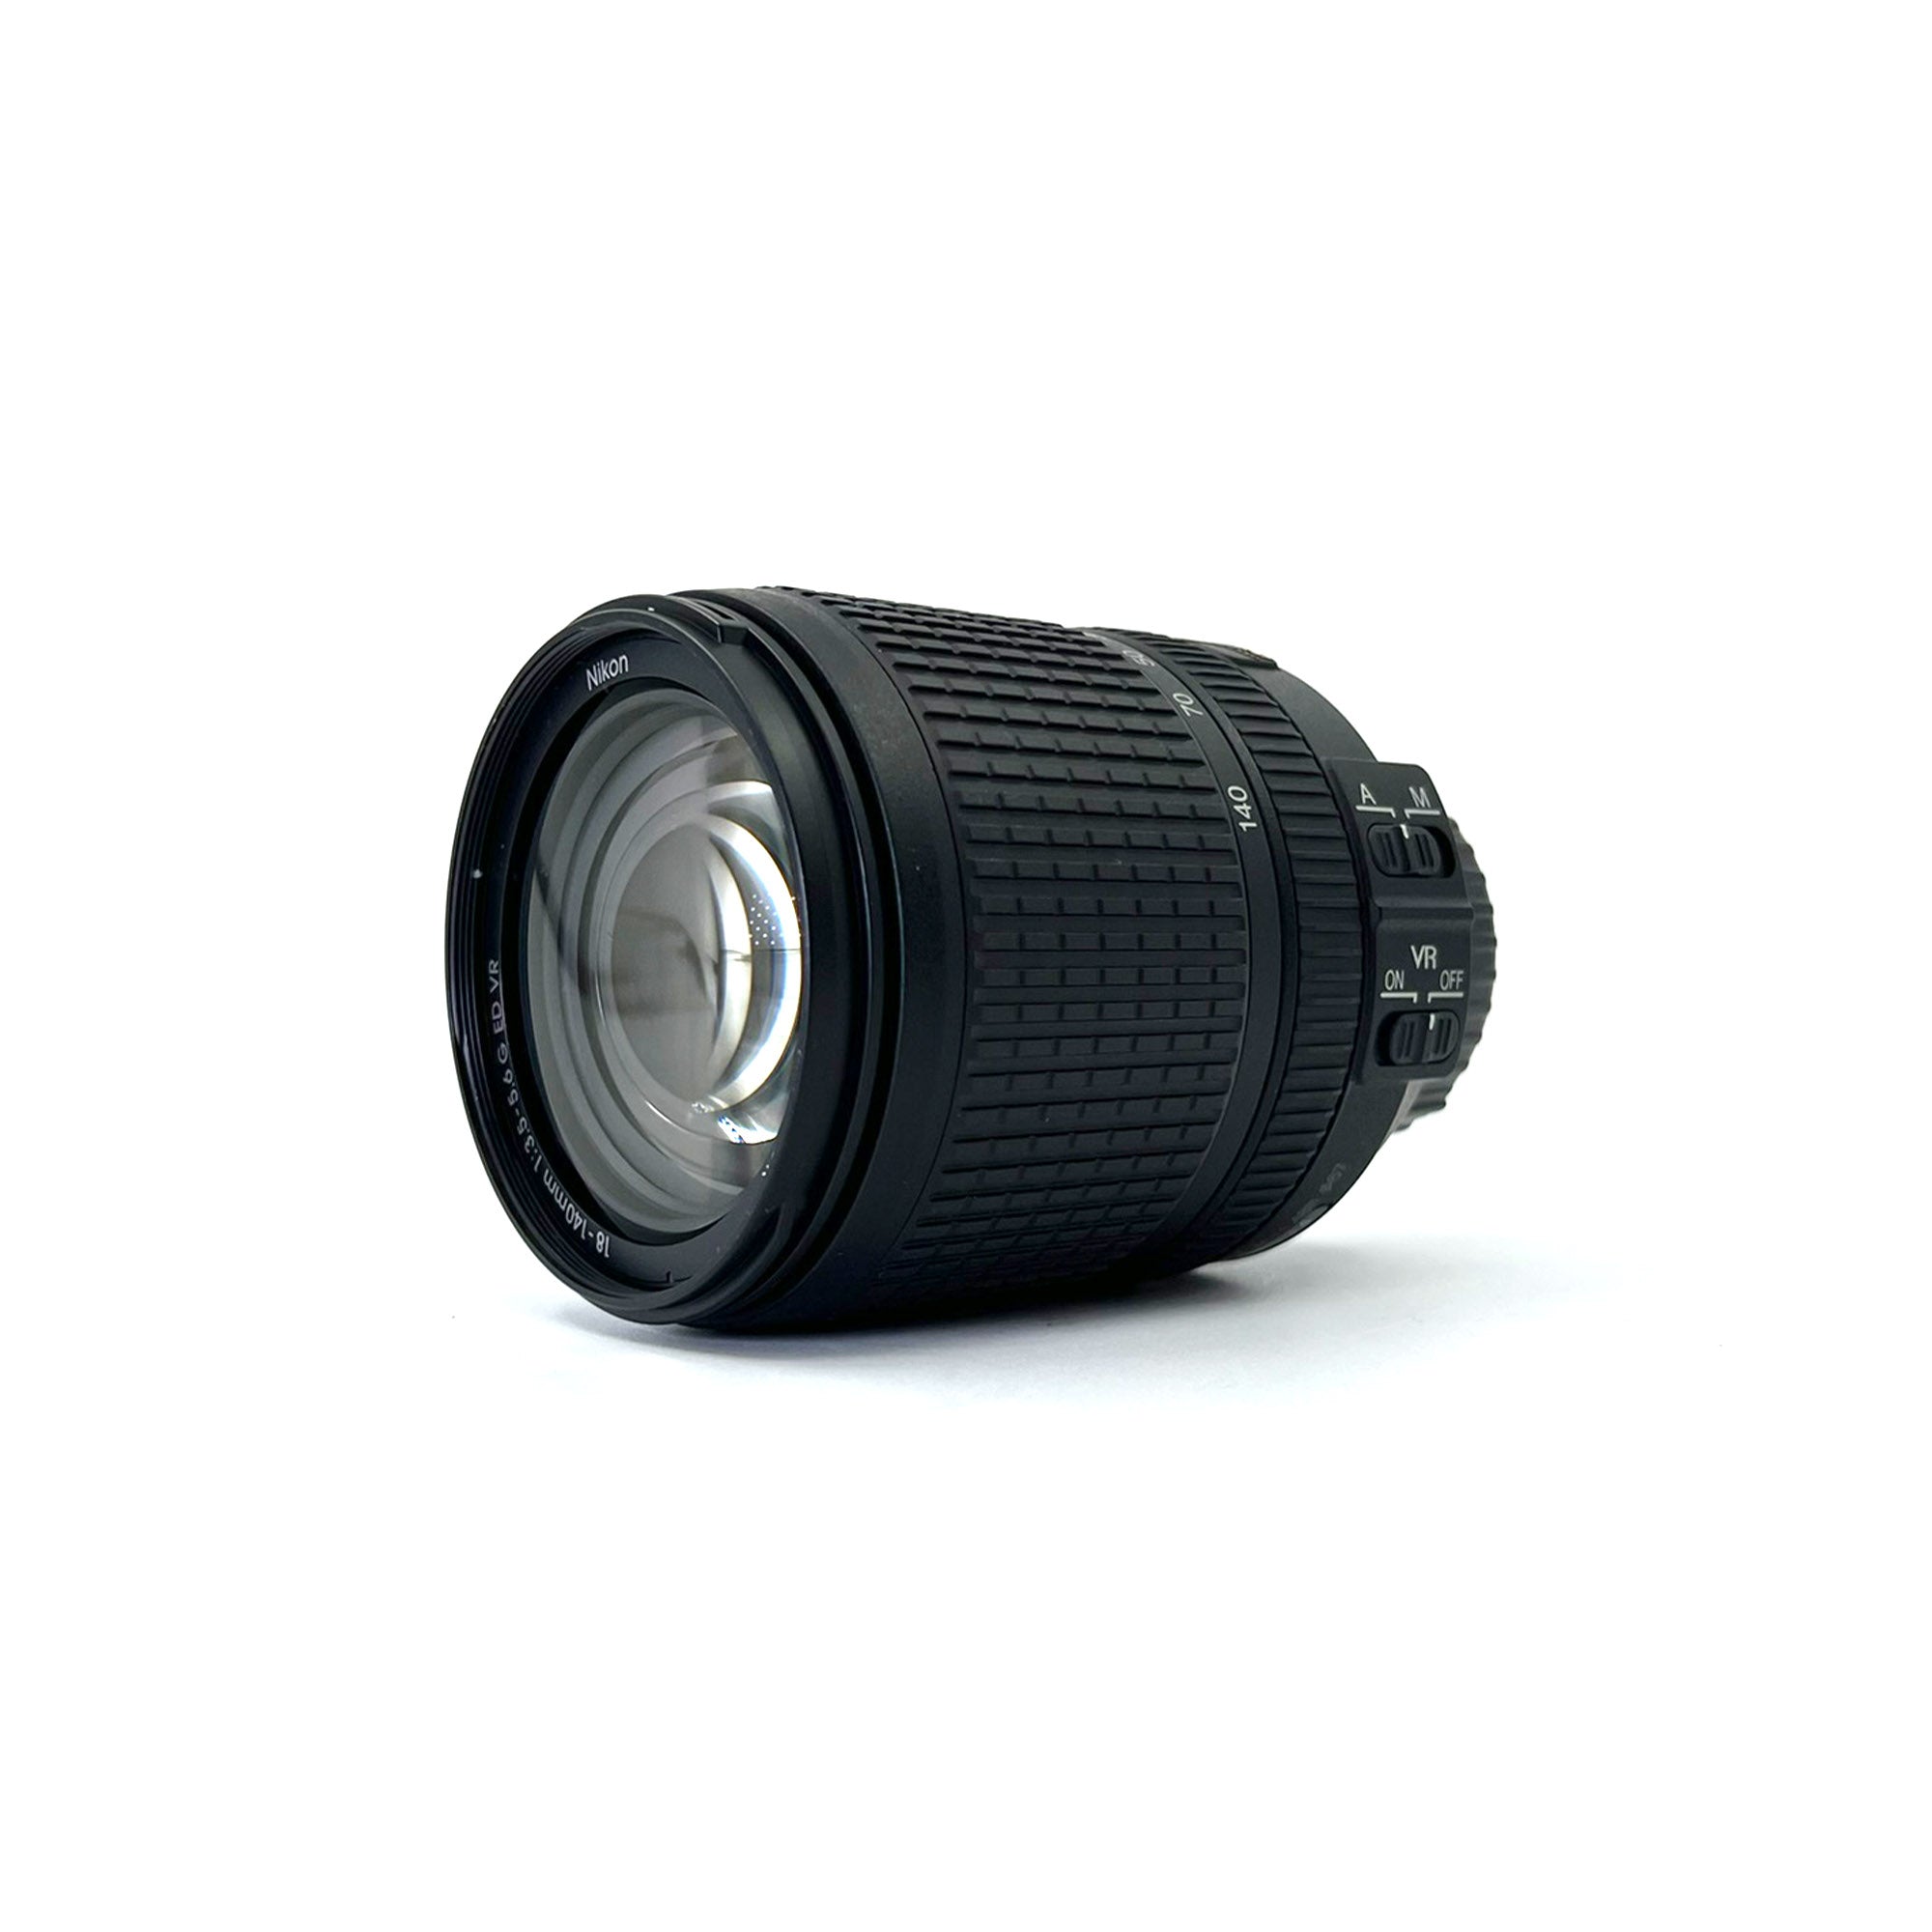 Nikon D5600 DSLR Camera with 18-140mm Lens (International Model)